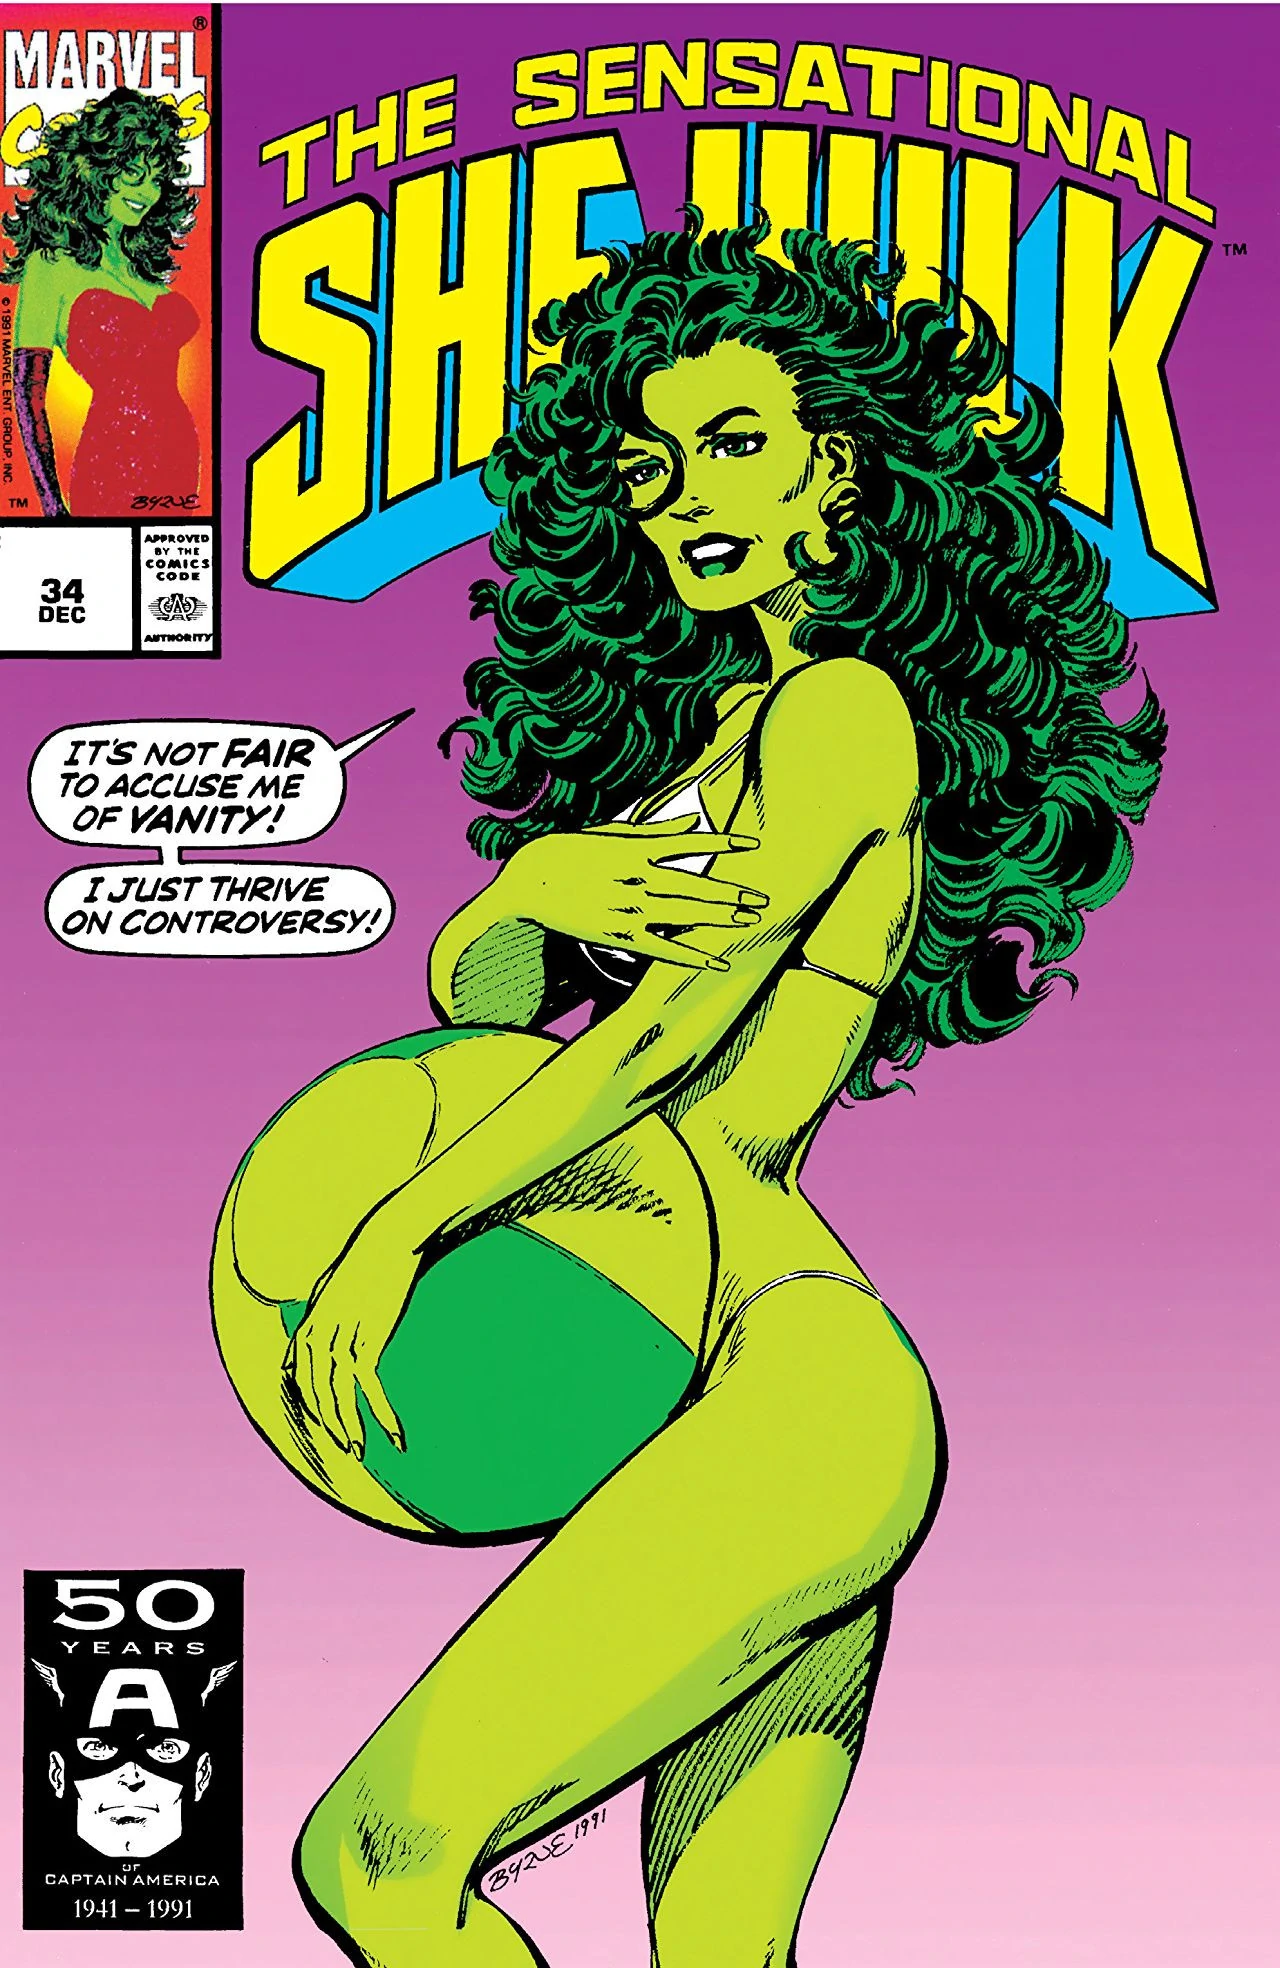 She-Hulk, a bodybuilder body against stereotypes